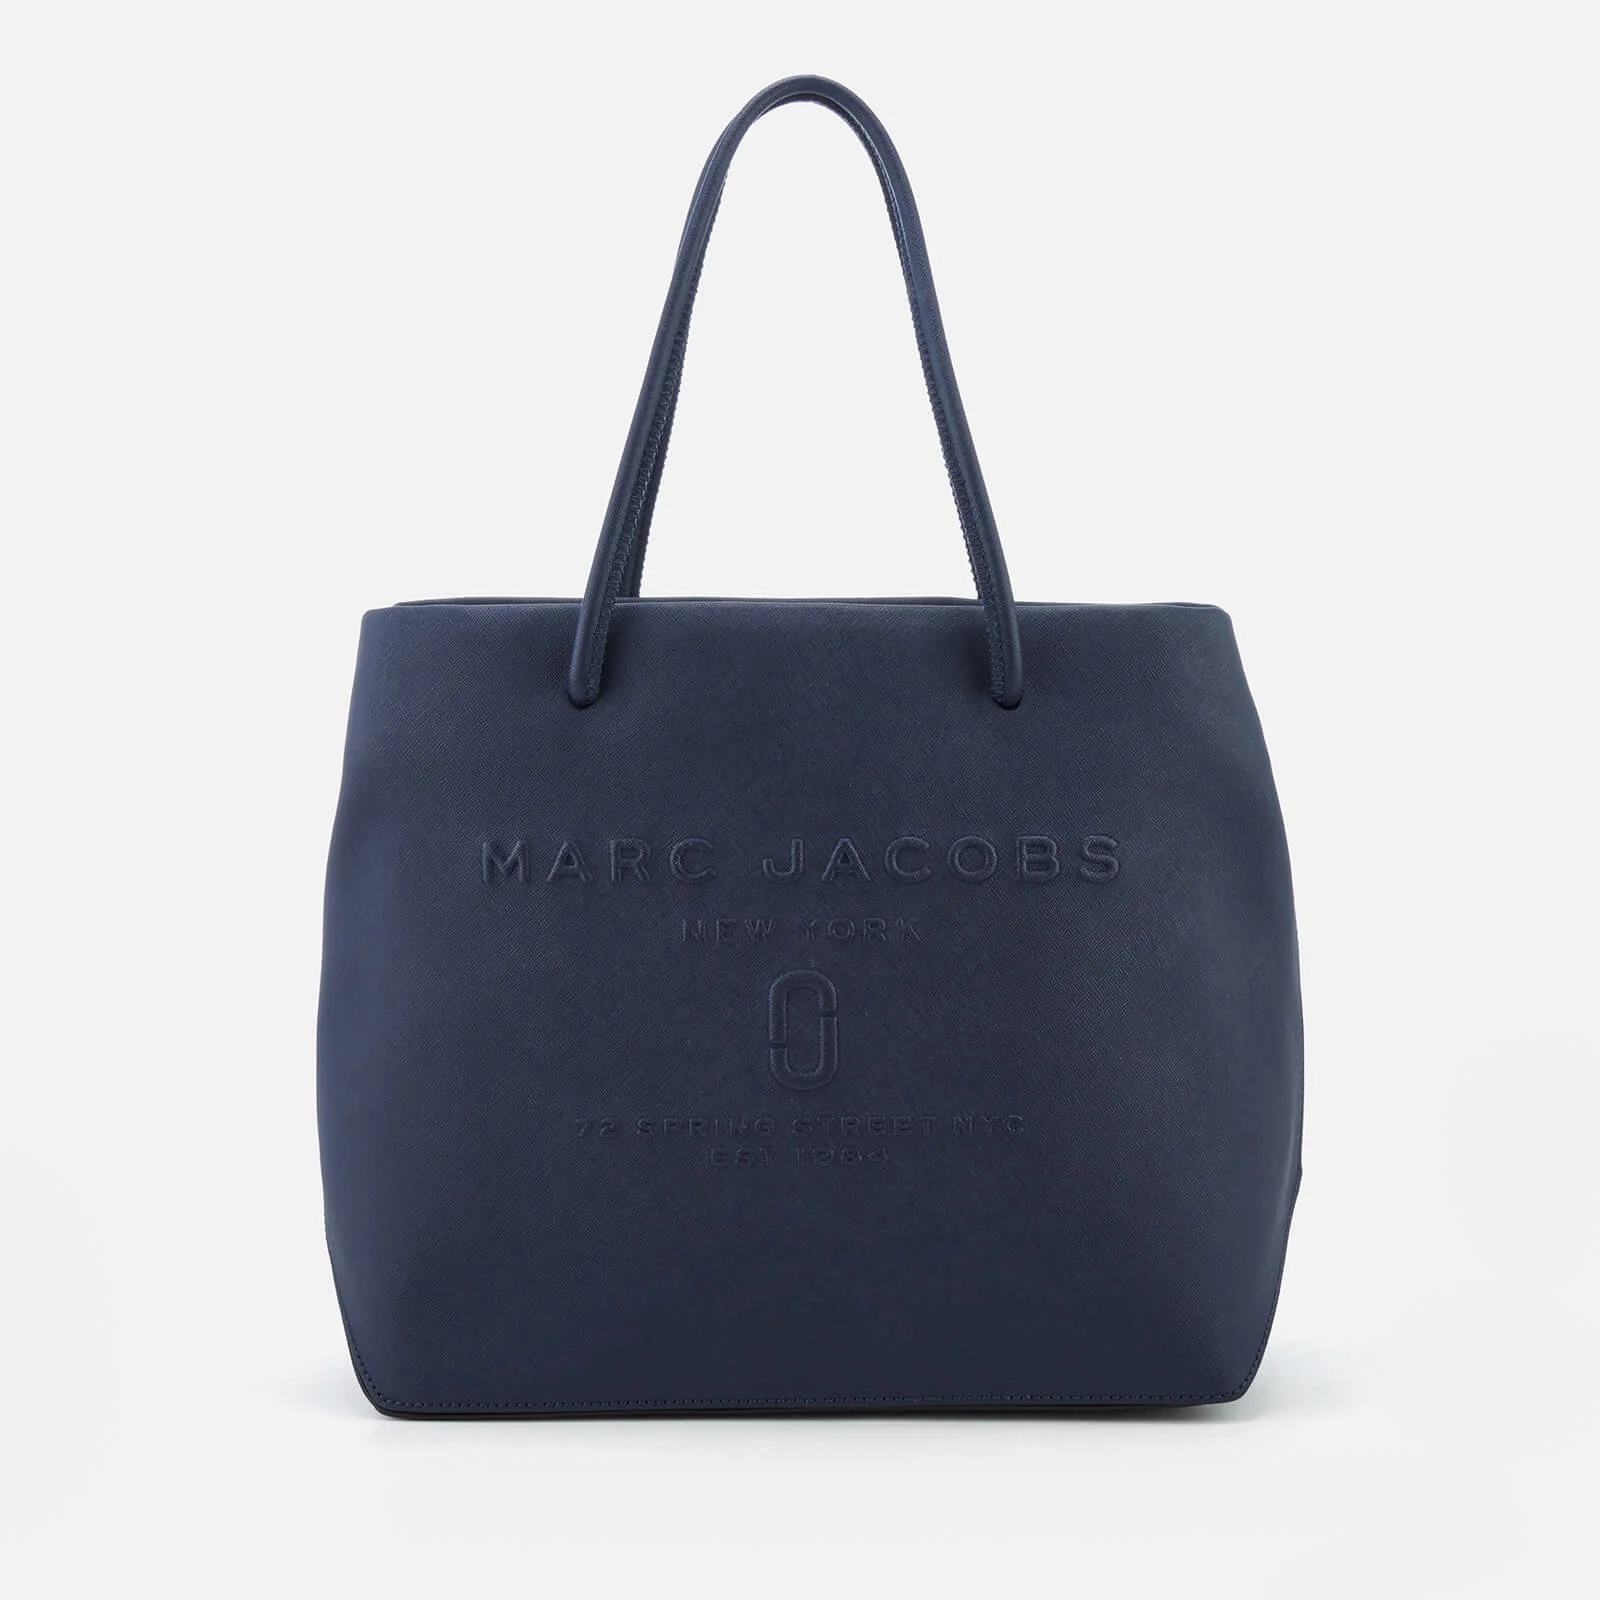 Marc Jacobs Women's Logo Shopper East West Tote Bag - Midnight Blue Image 1